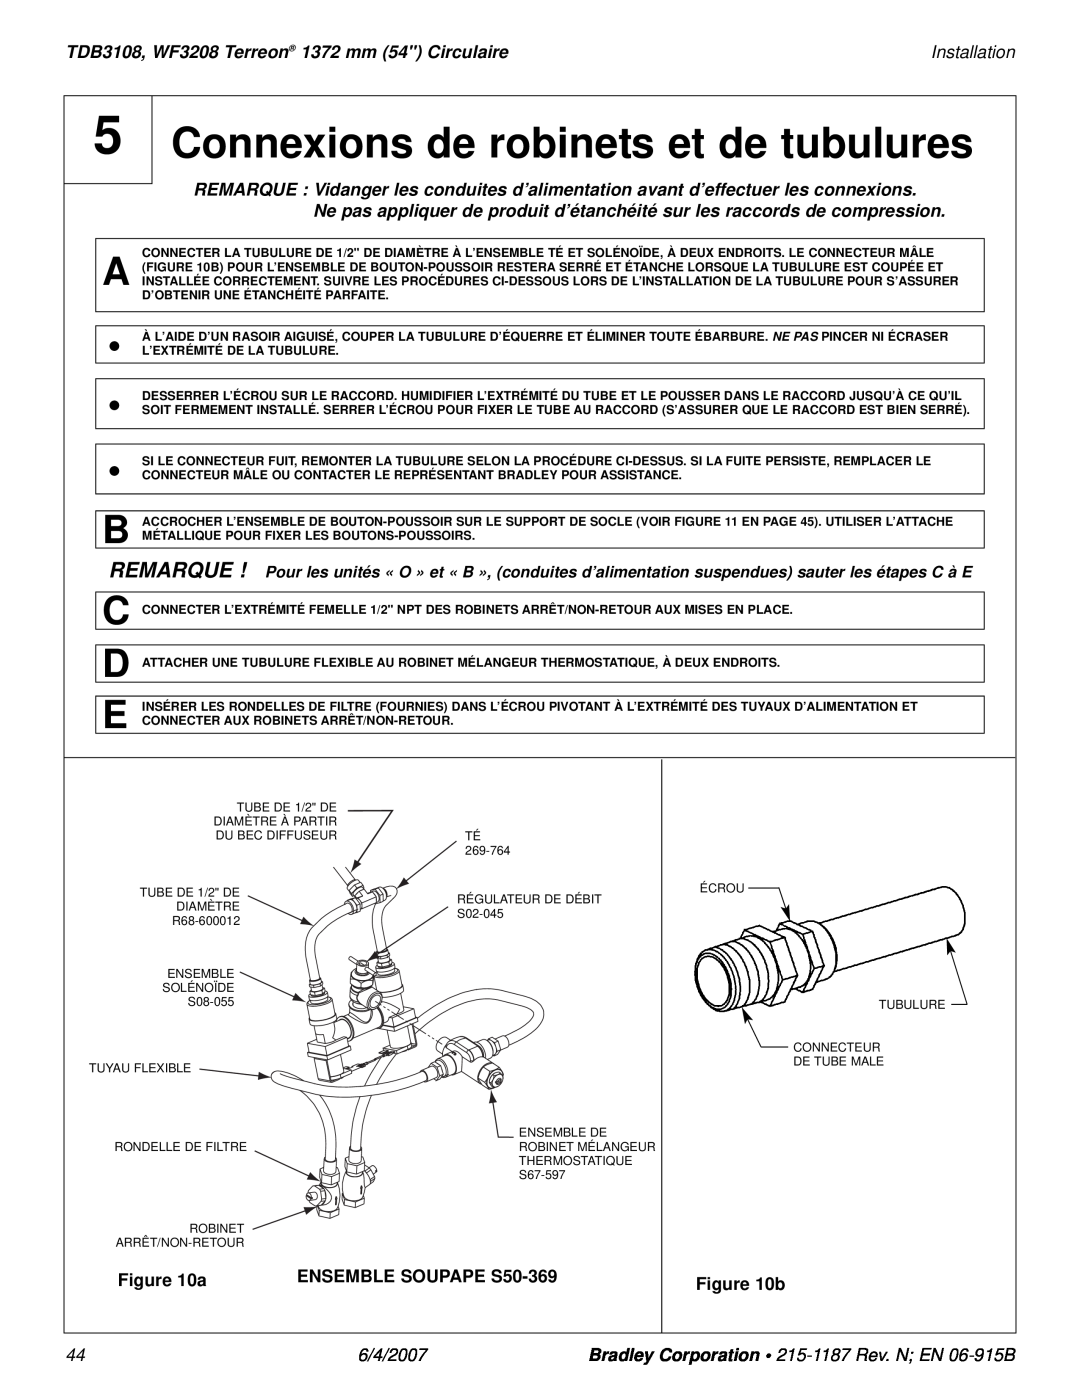 Bradley Smoker Connexions de robinets et de tubulures, TDB3108, WF3208 Terreon 1372 mm 54 Circulaire, Installation 